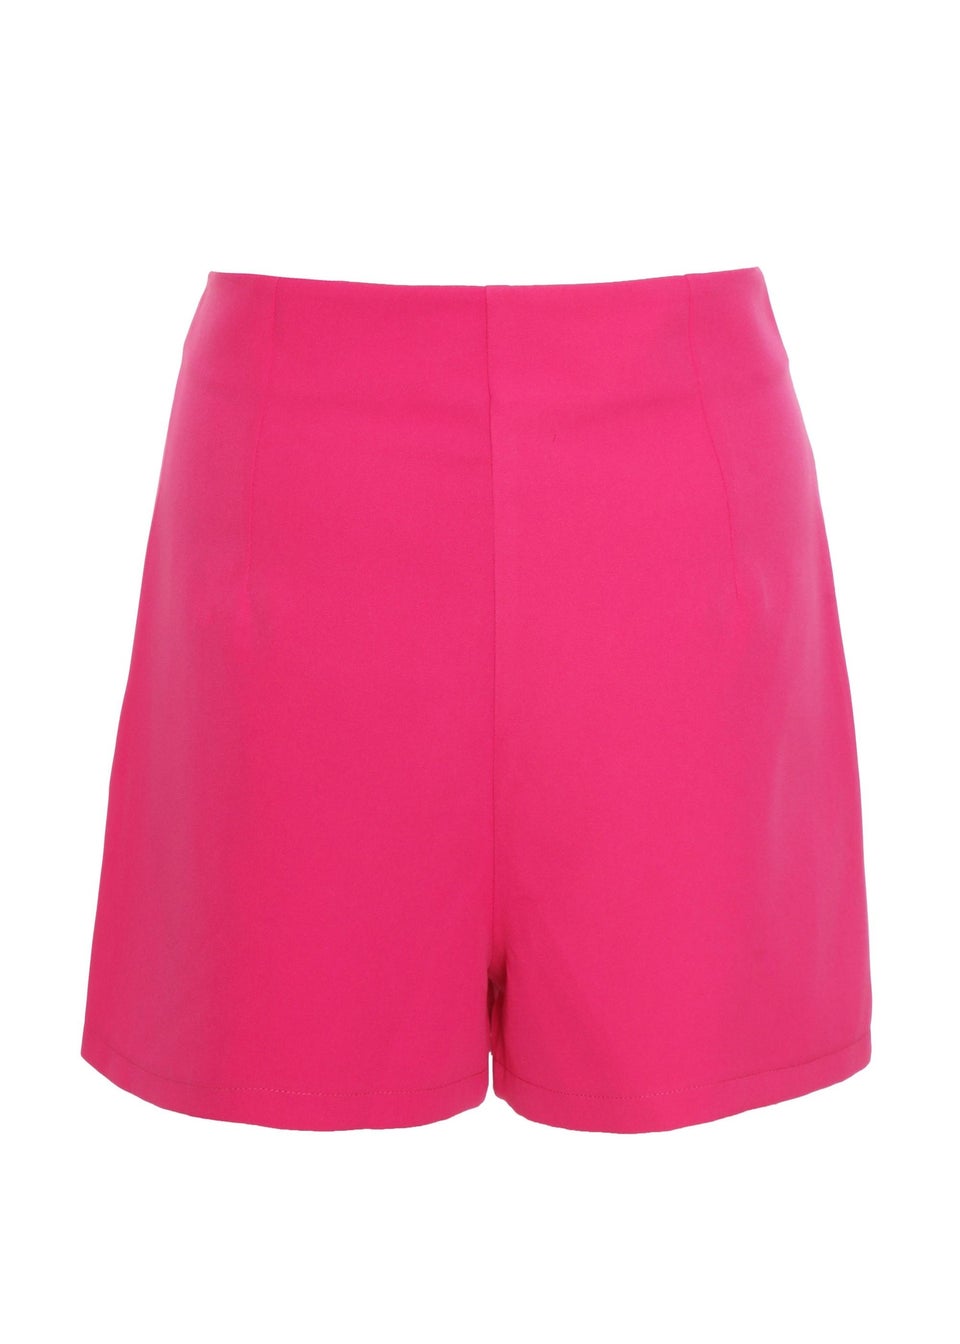 Quiz Fuschia Button Tailored Shorts - Matalan